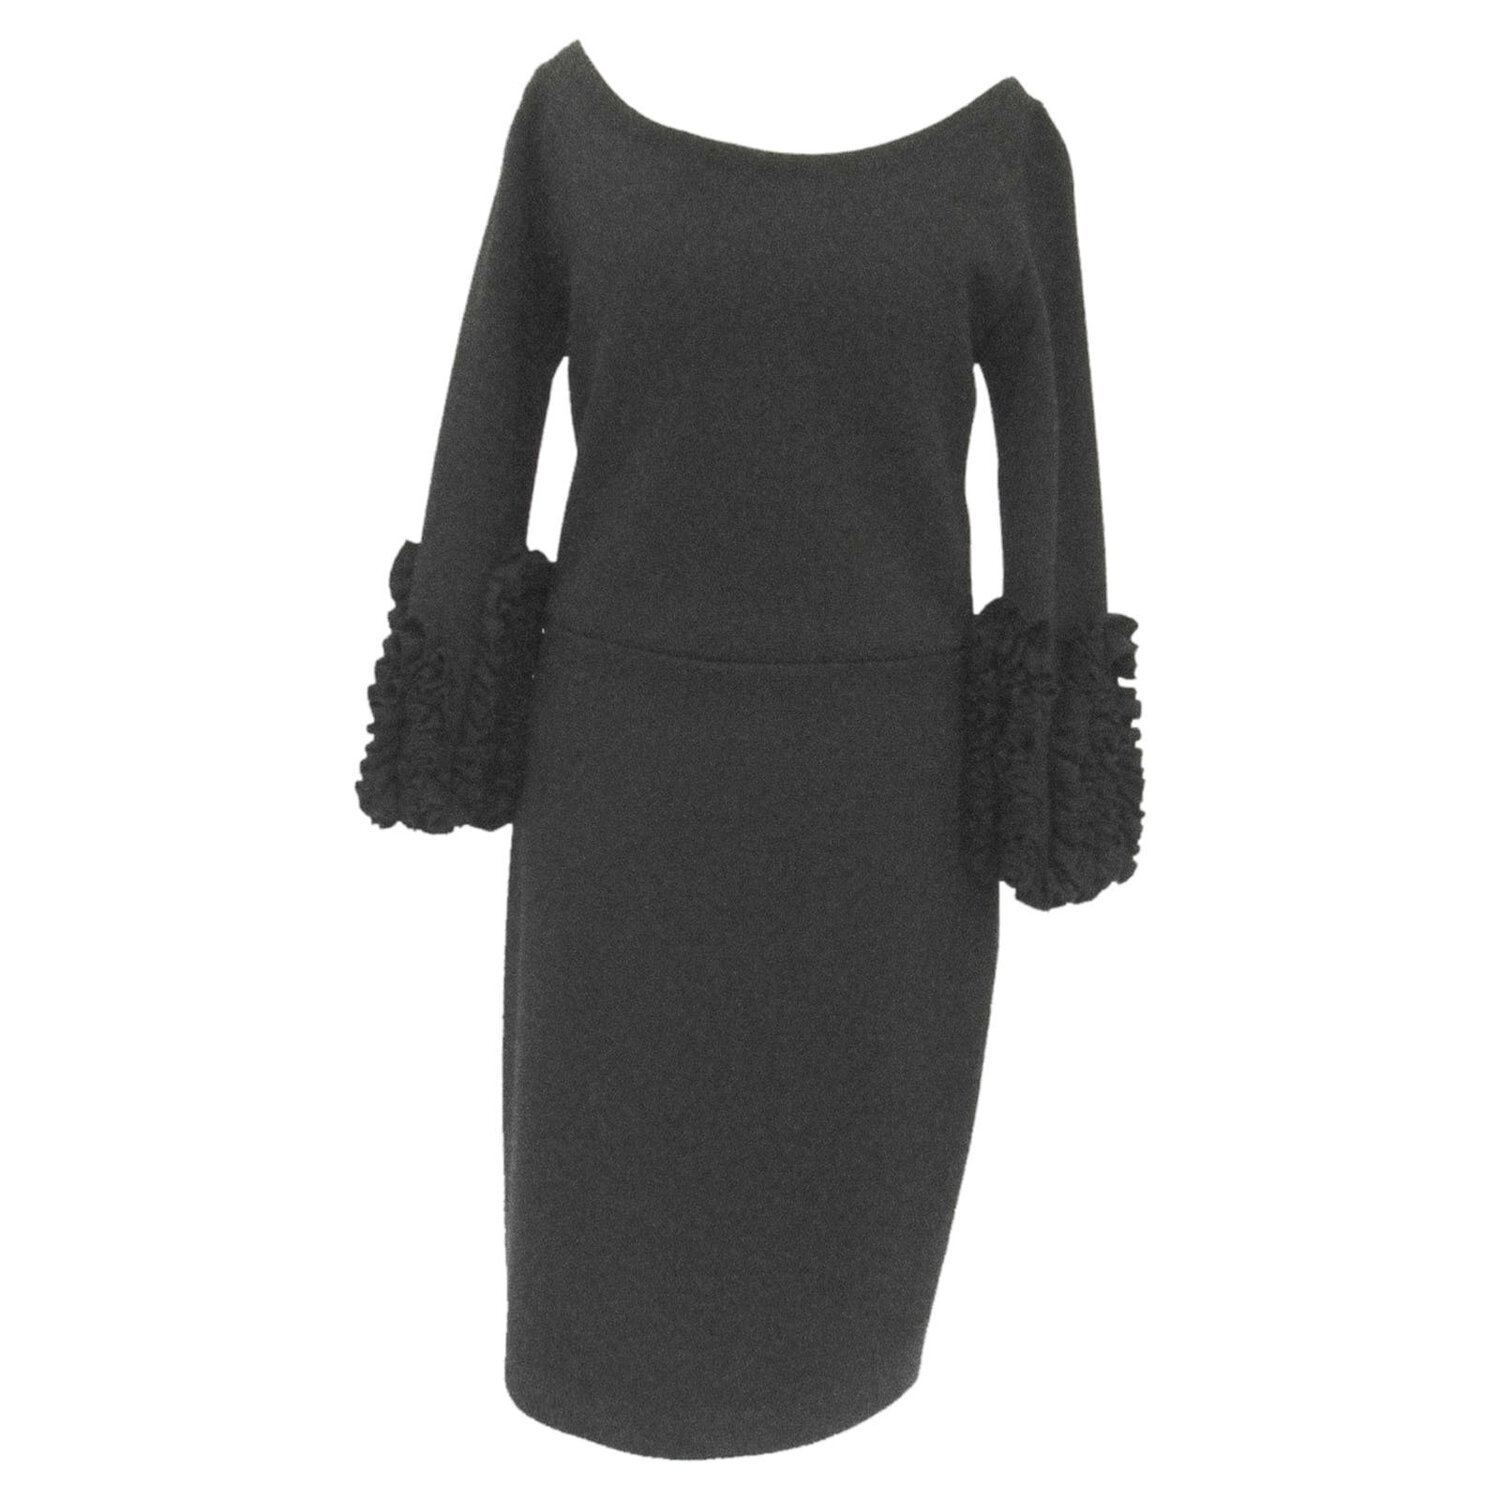 Christian Dior Ruffled-Cuff Sheath Dress in Black — UFO No More